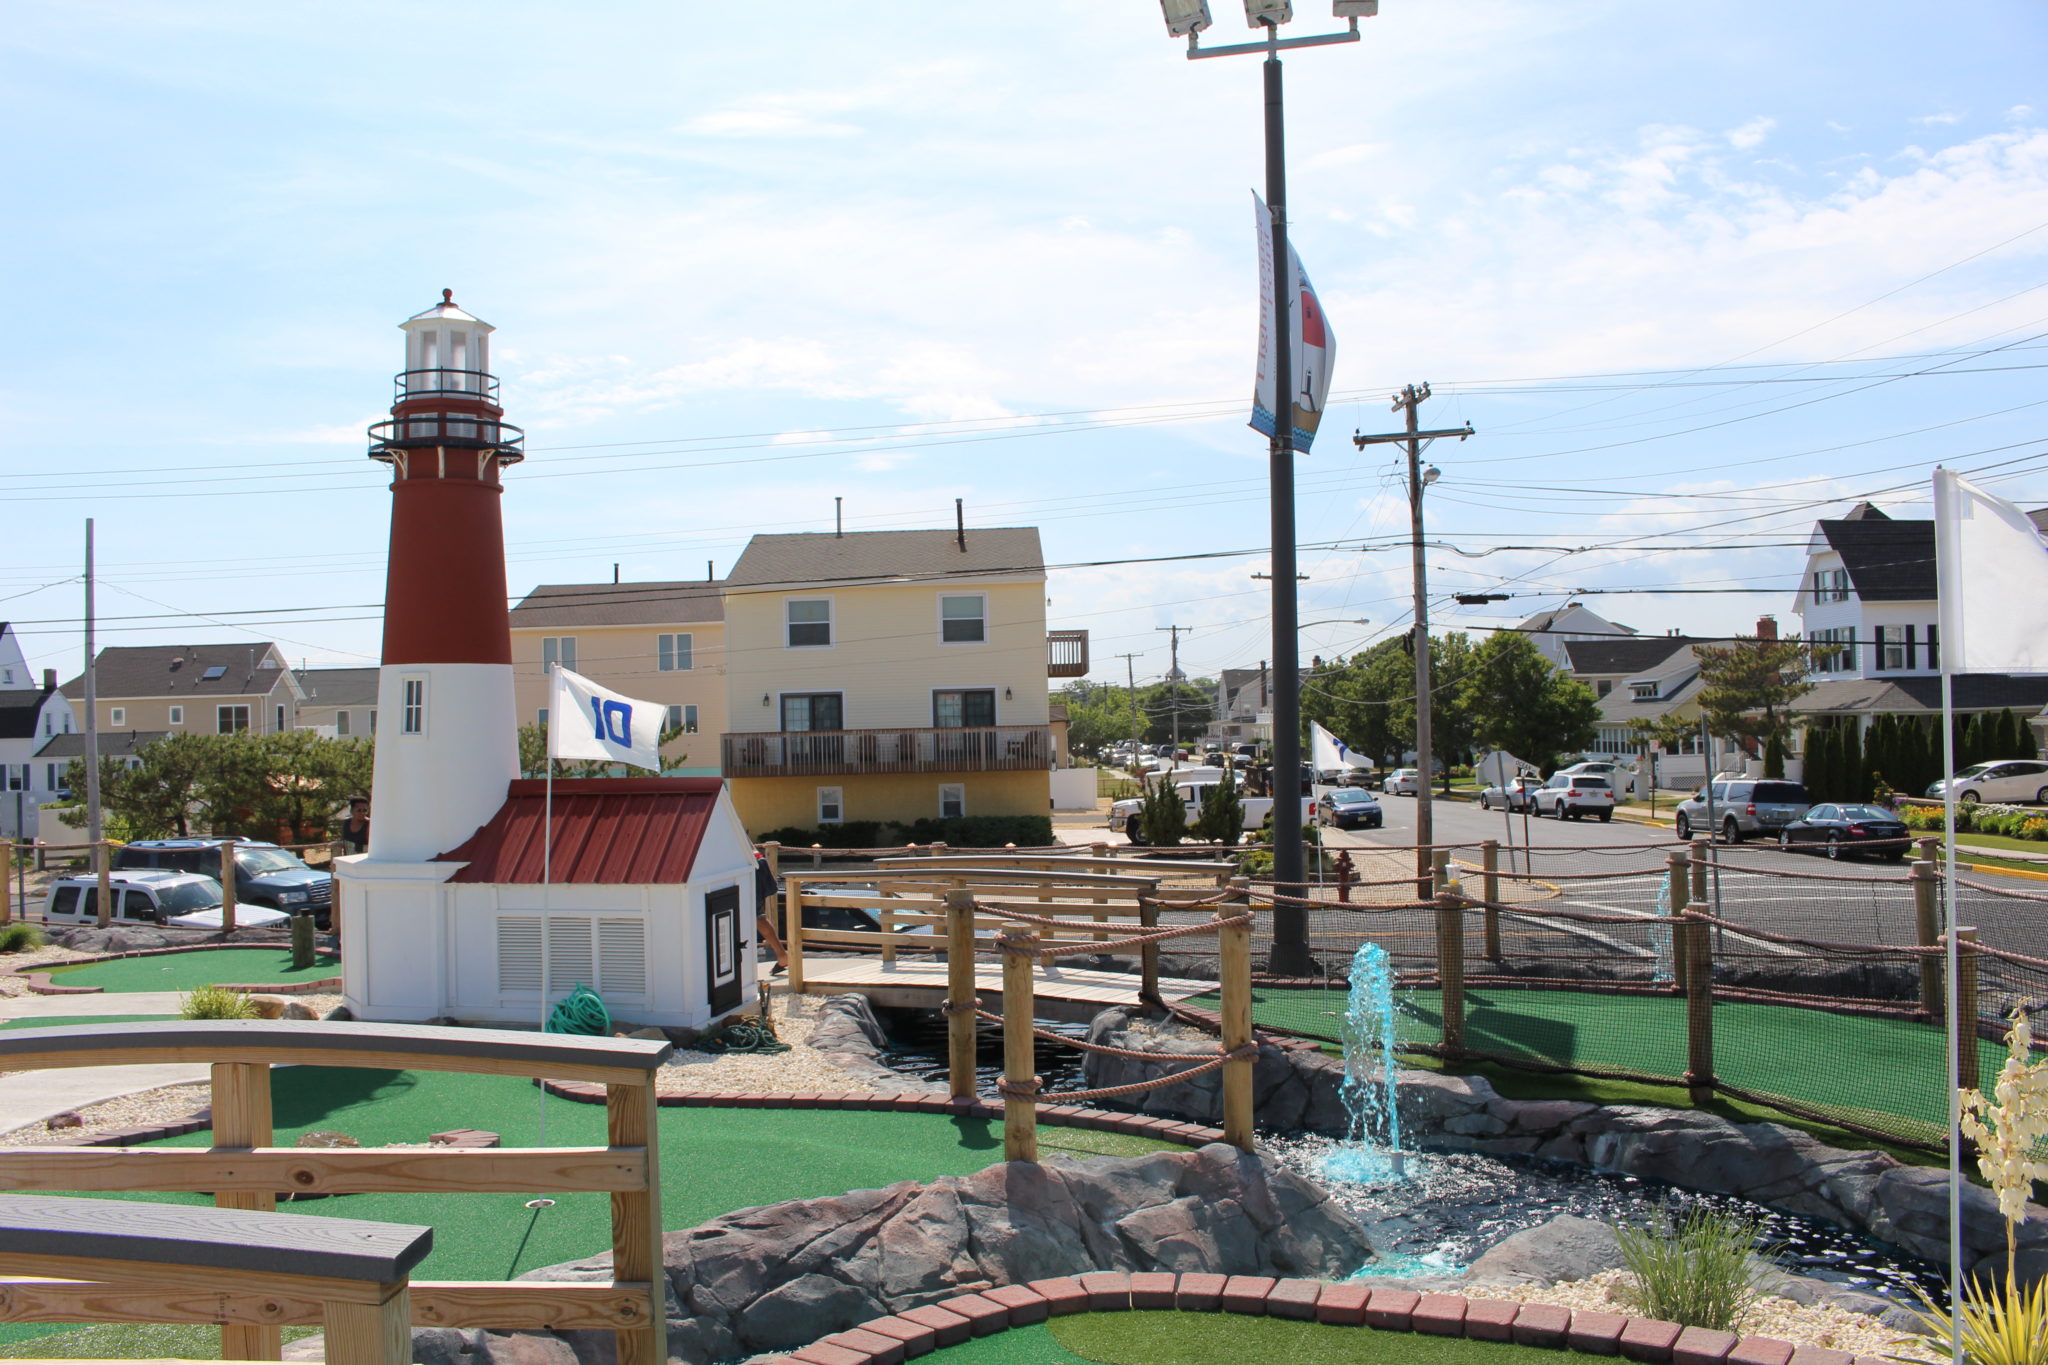 jenkinsons-boardwalk-point-plesant-beach-new-jersey-mini-golf-lighthousepoint-13